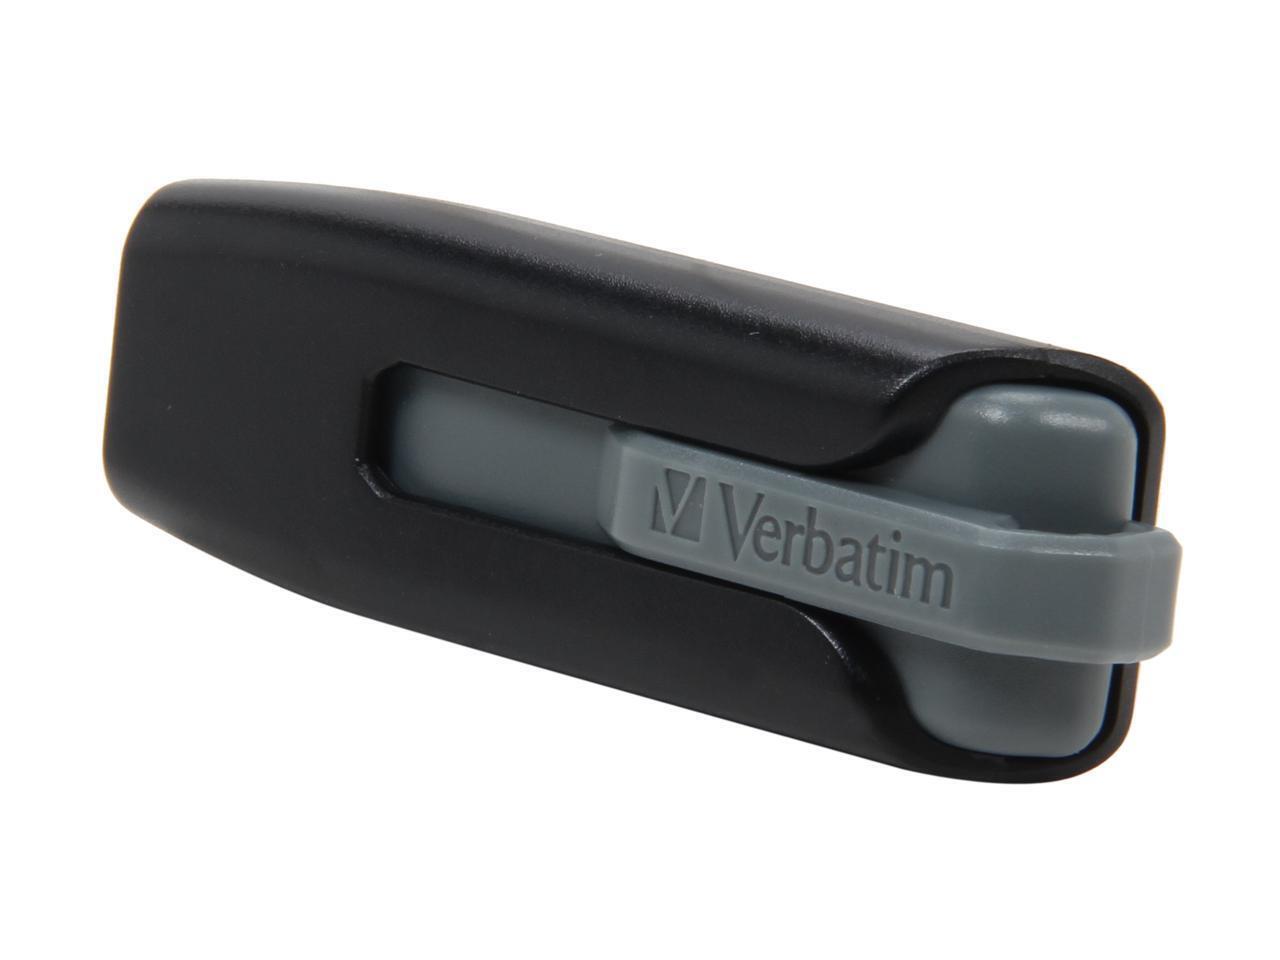 Verbatim Store 'n' Go V3 64GB USB 3.0 Flash Drive Model 49174